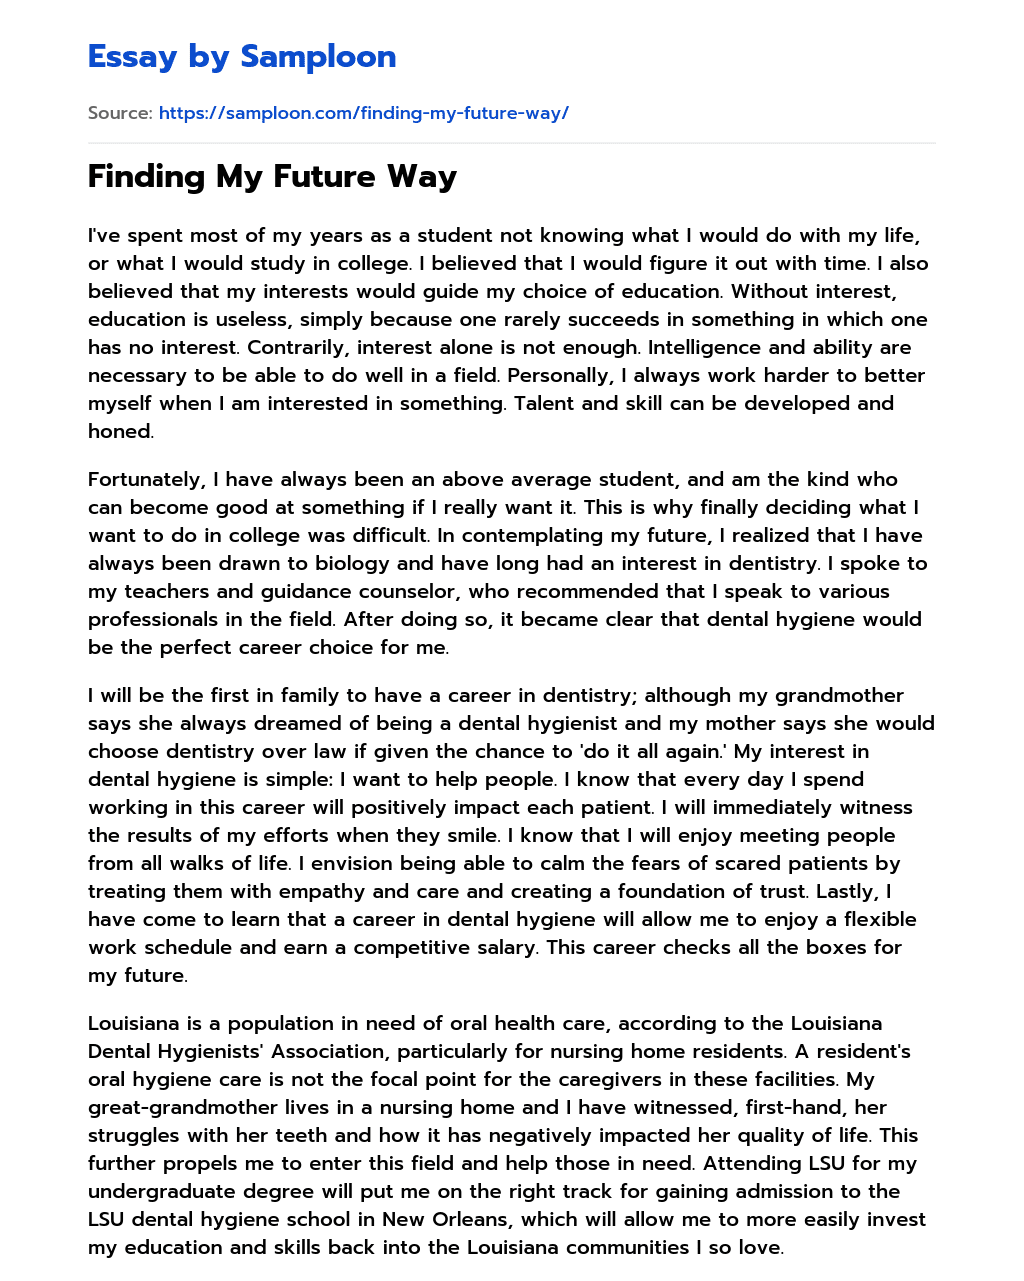 Finding My Future Way essay